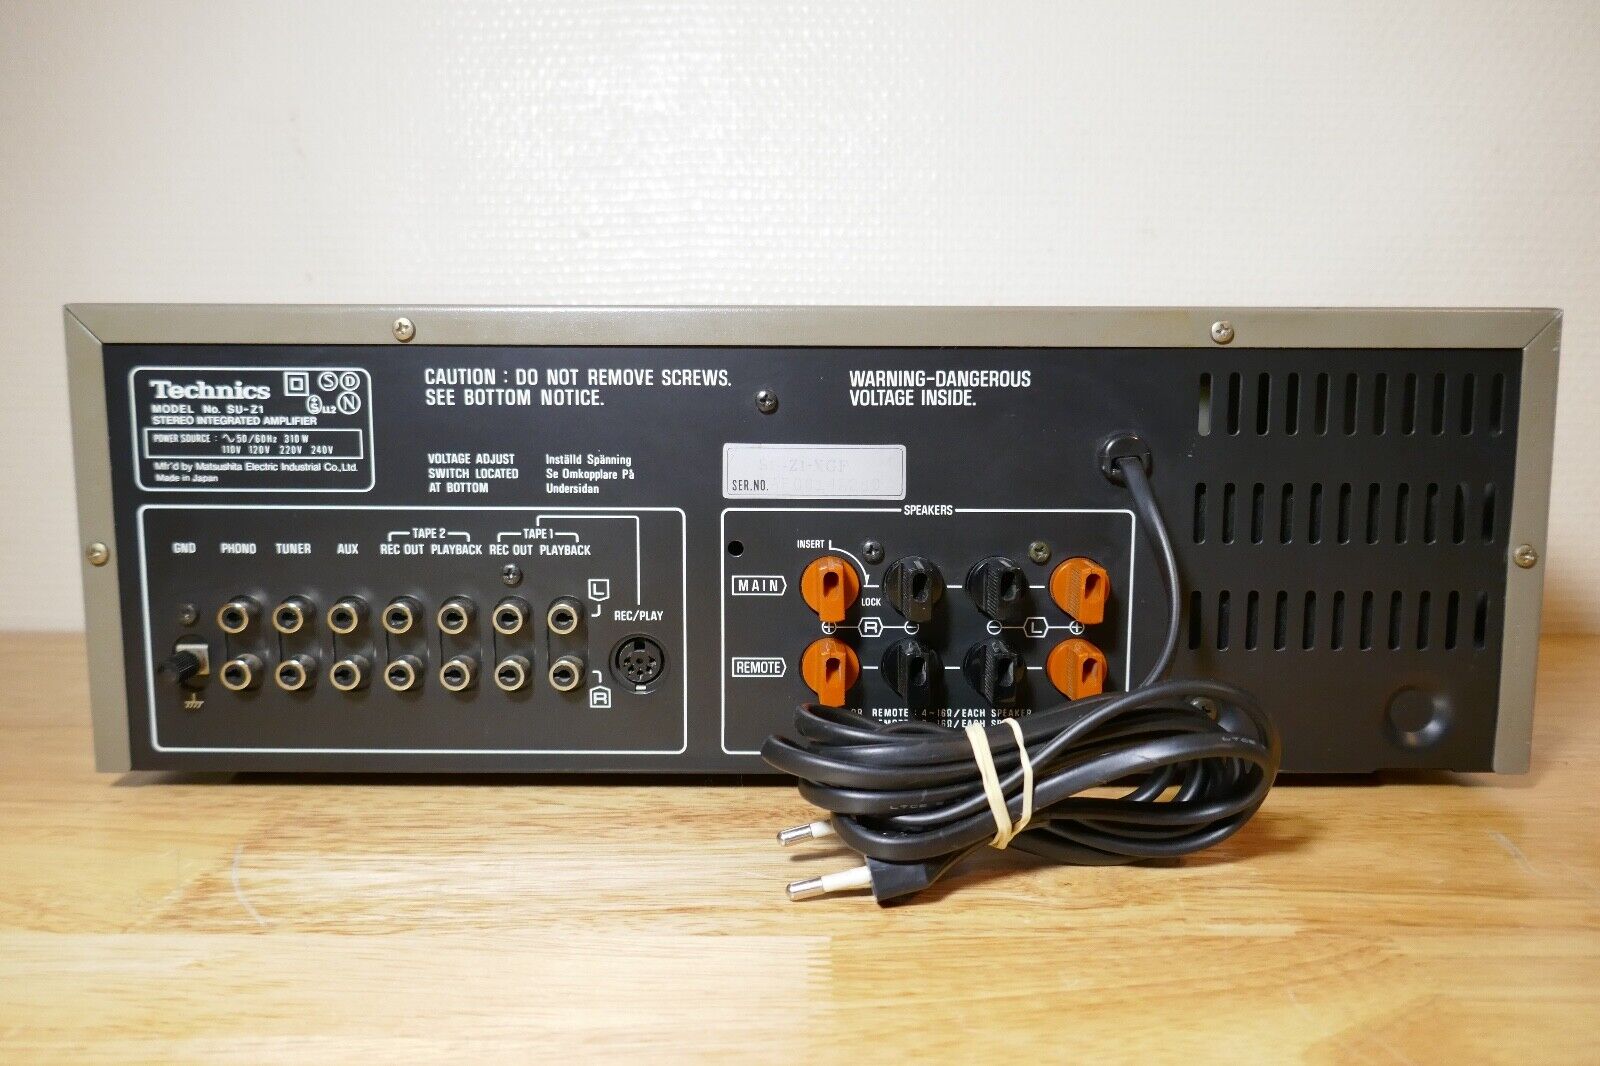 amplificateur amplifier technics SU-Z1 vintage occasion